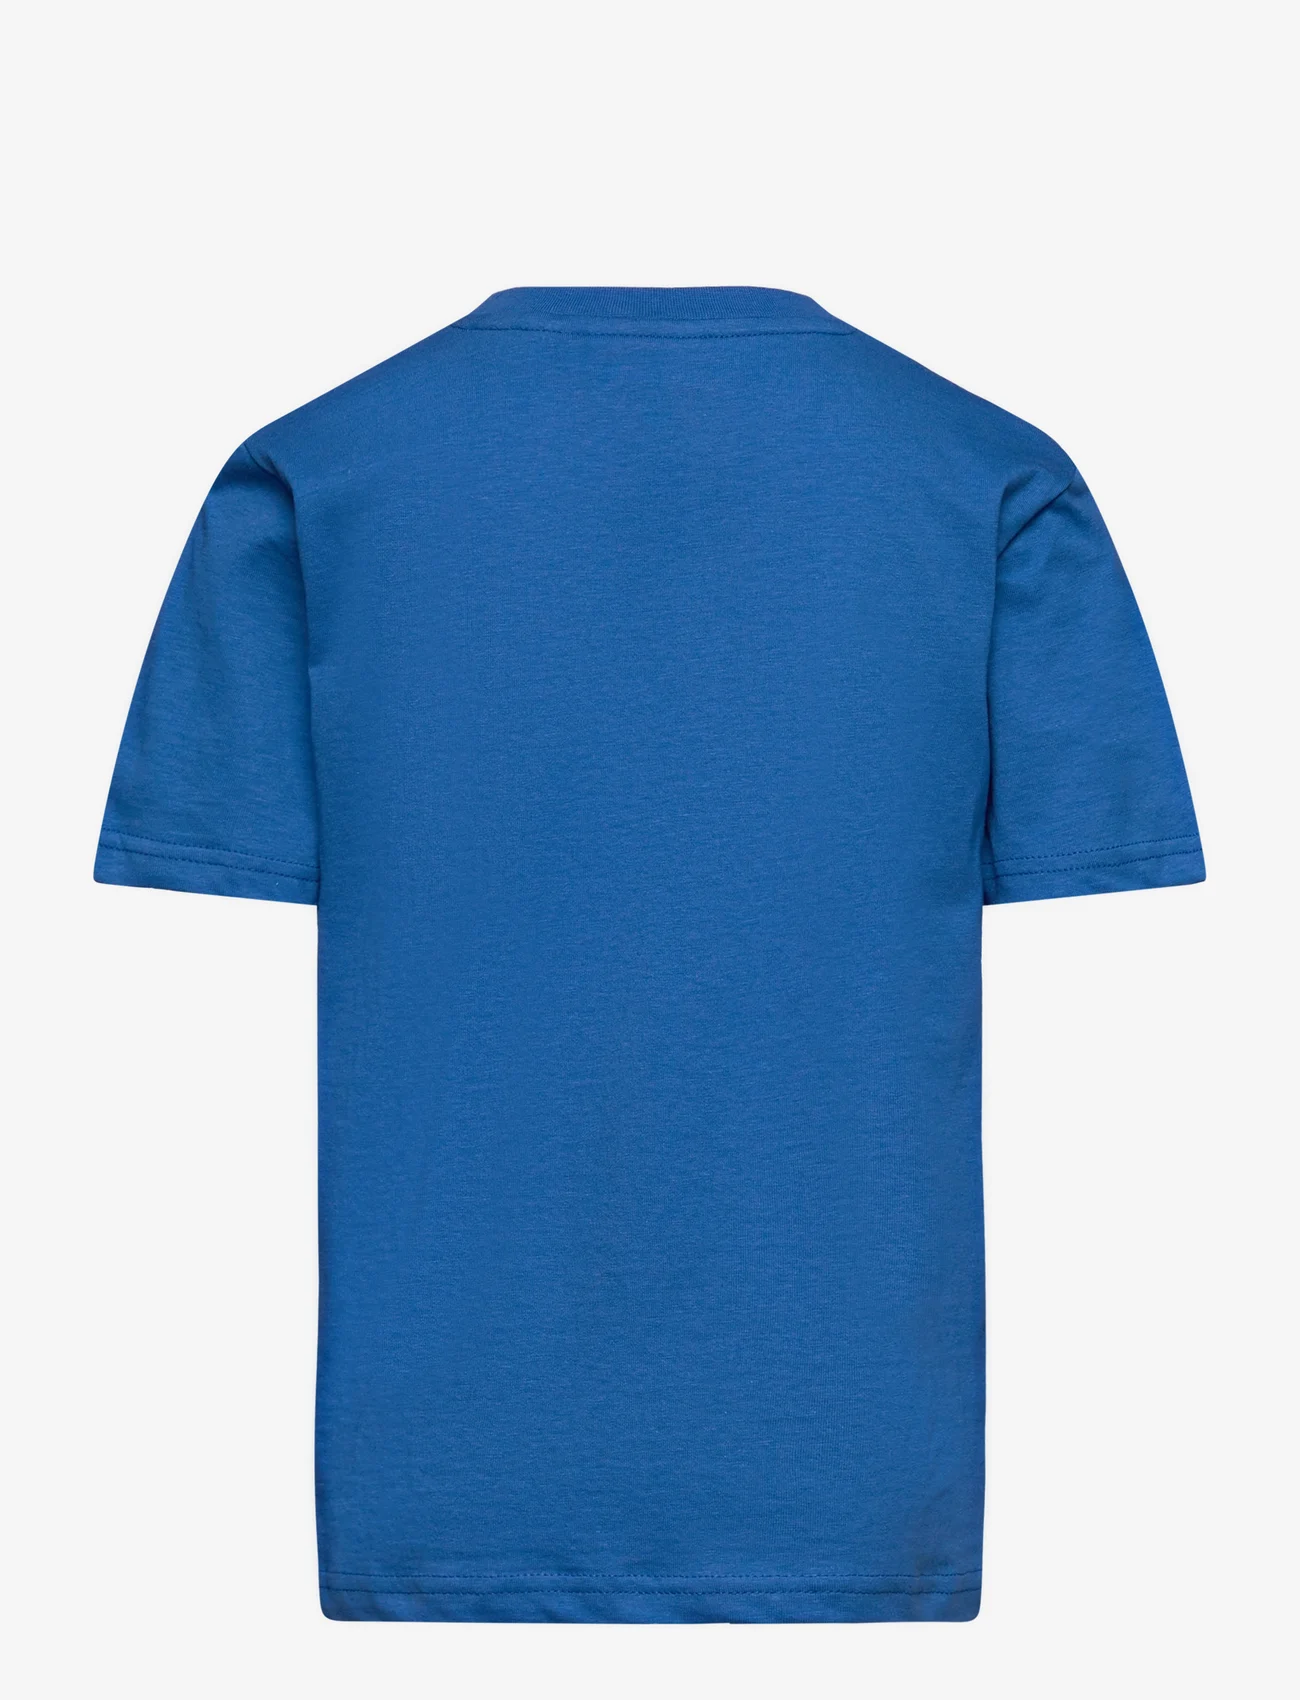 FILA - LEIENKAUL graphic tee - kortärmade t-shirts - princess blue - 1